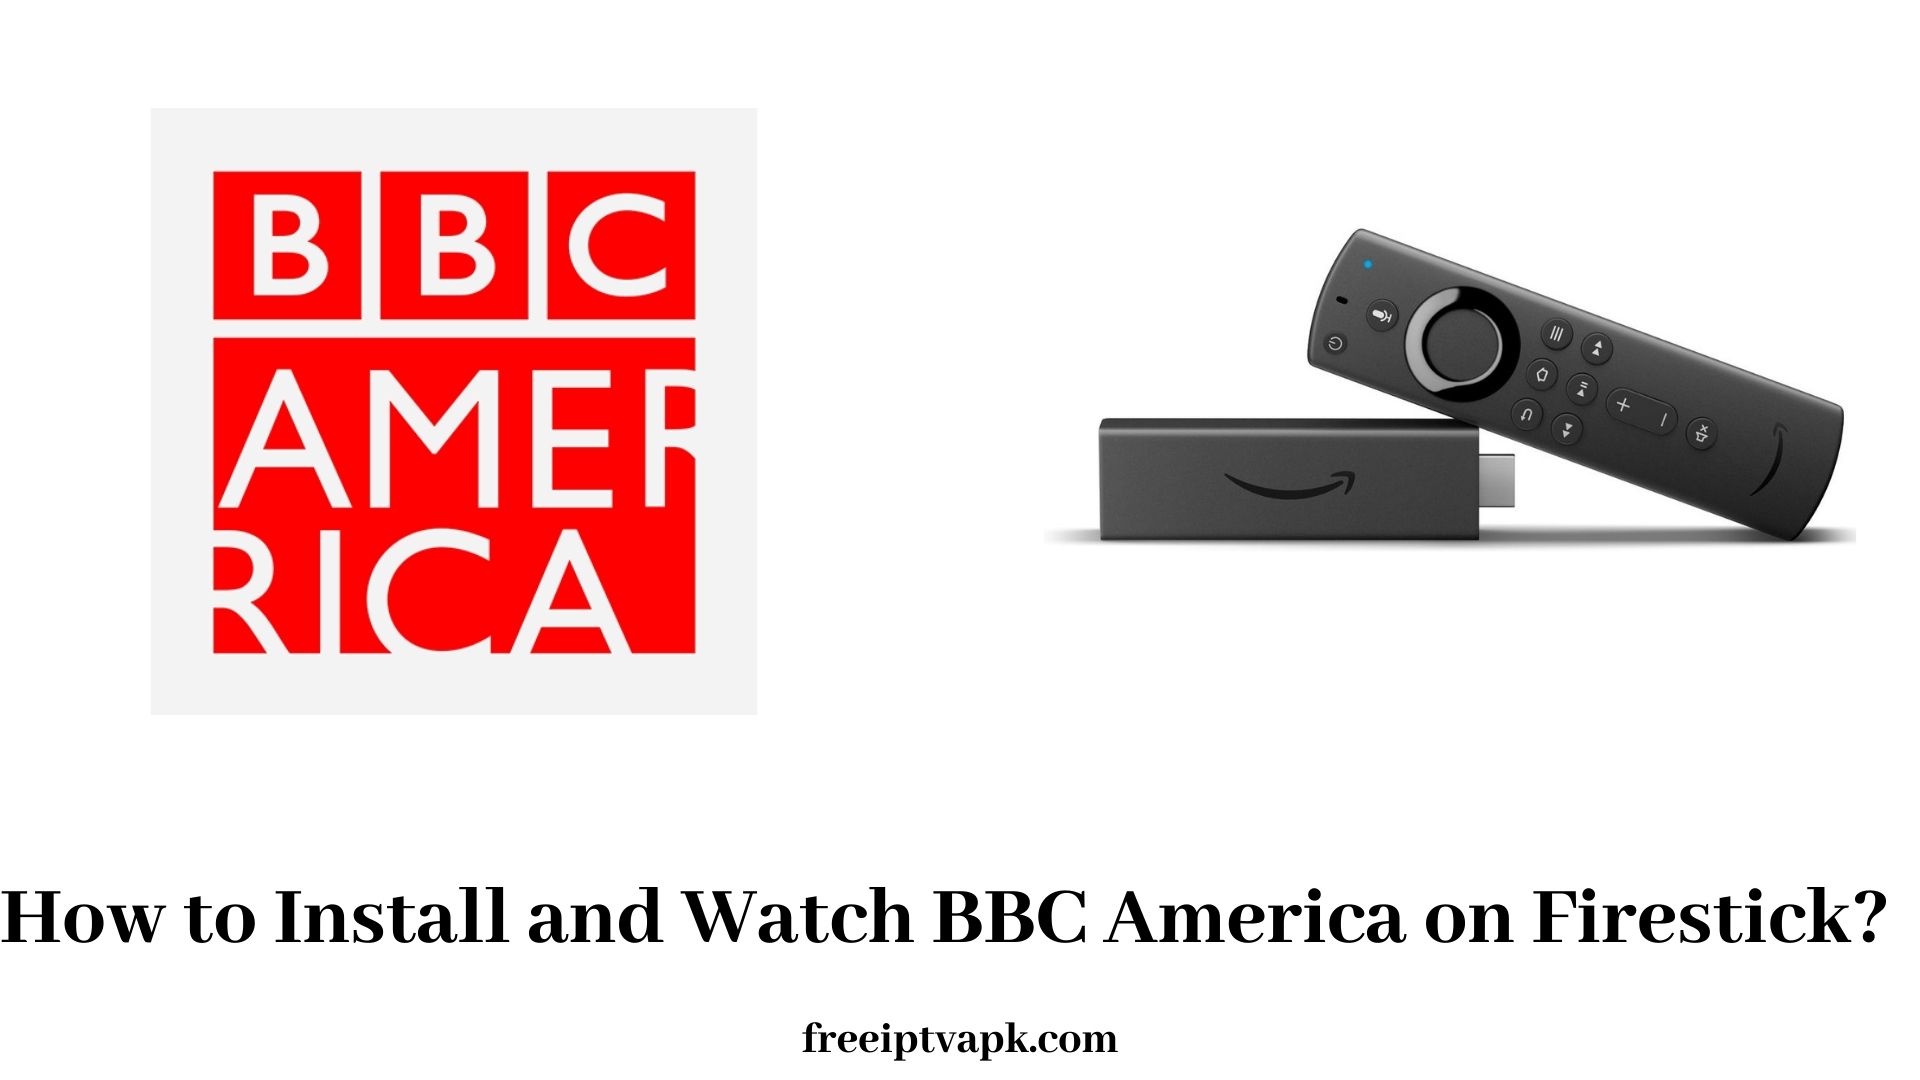 BBC America on Firestick